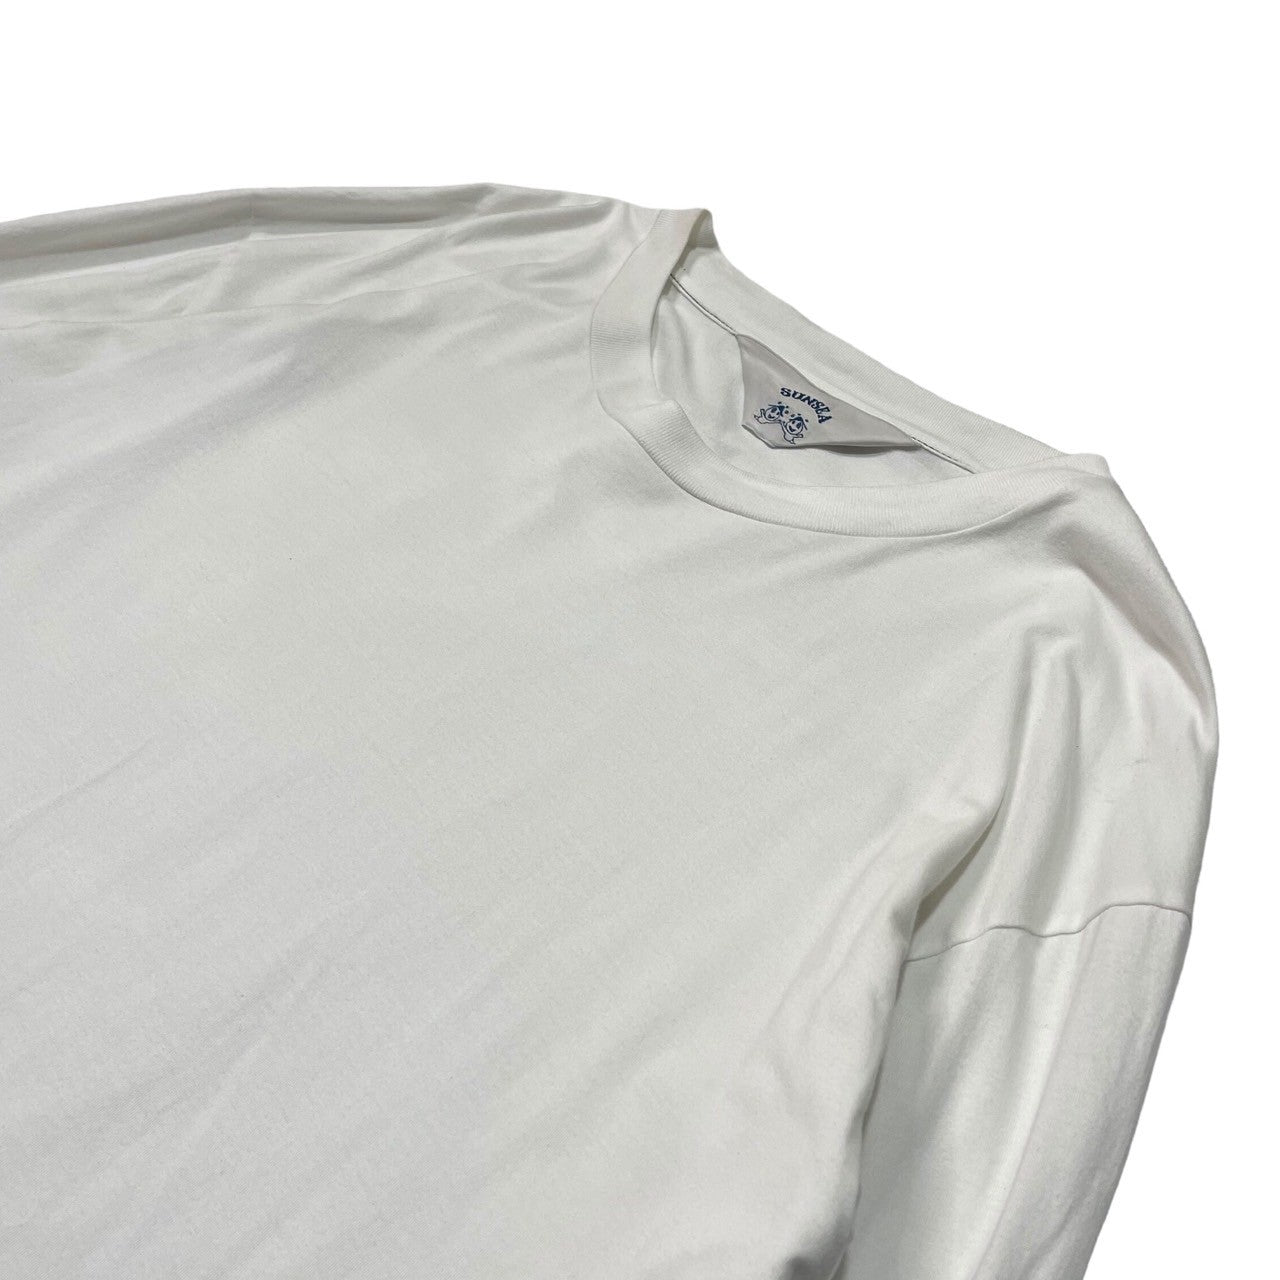 SUNSEA(サンシー) 21SS Shirt Long T-shirt シャツ ロングTシャツ ロン 